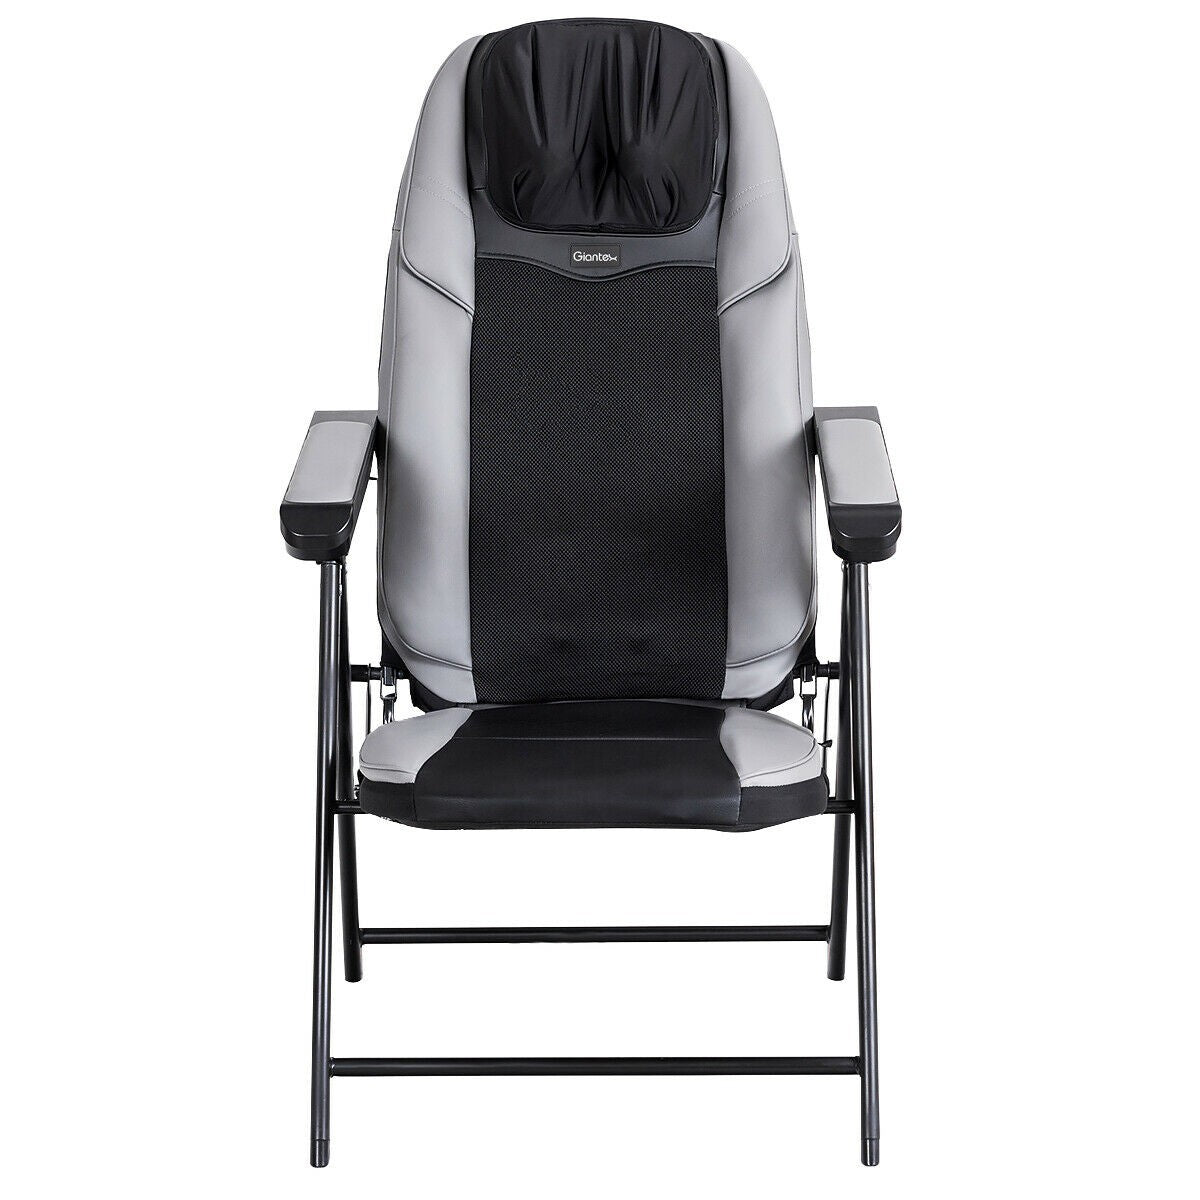 MedicPure Folding Shiatsu Massage Chair